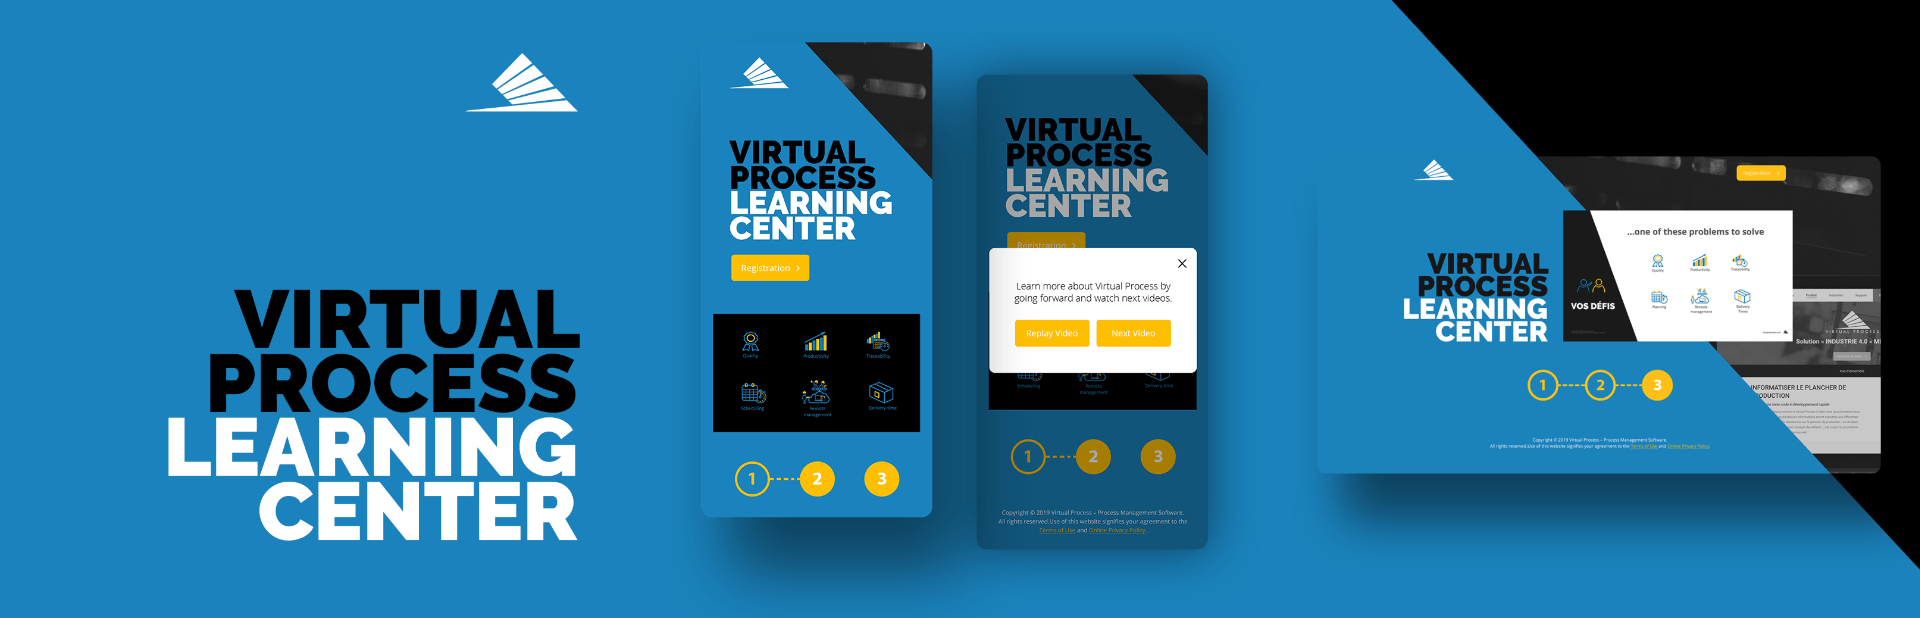 Virtual Process Leadning Center UI